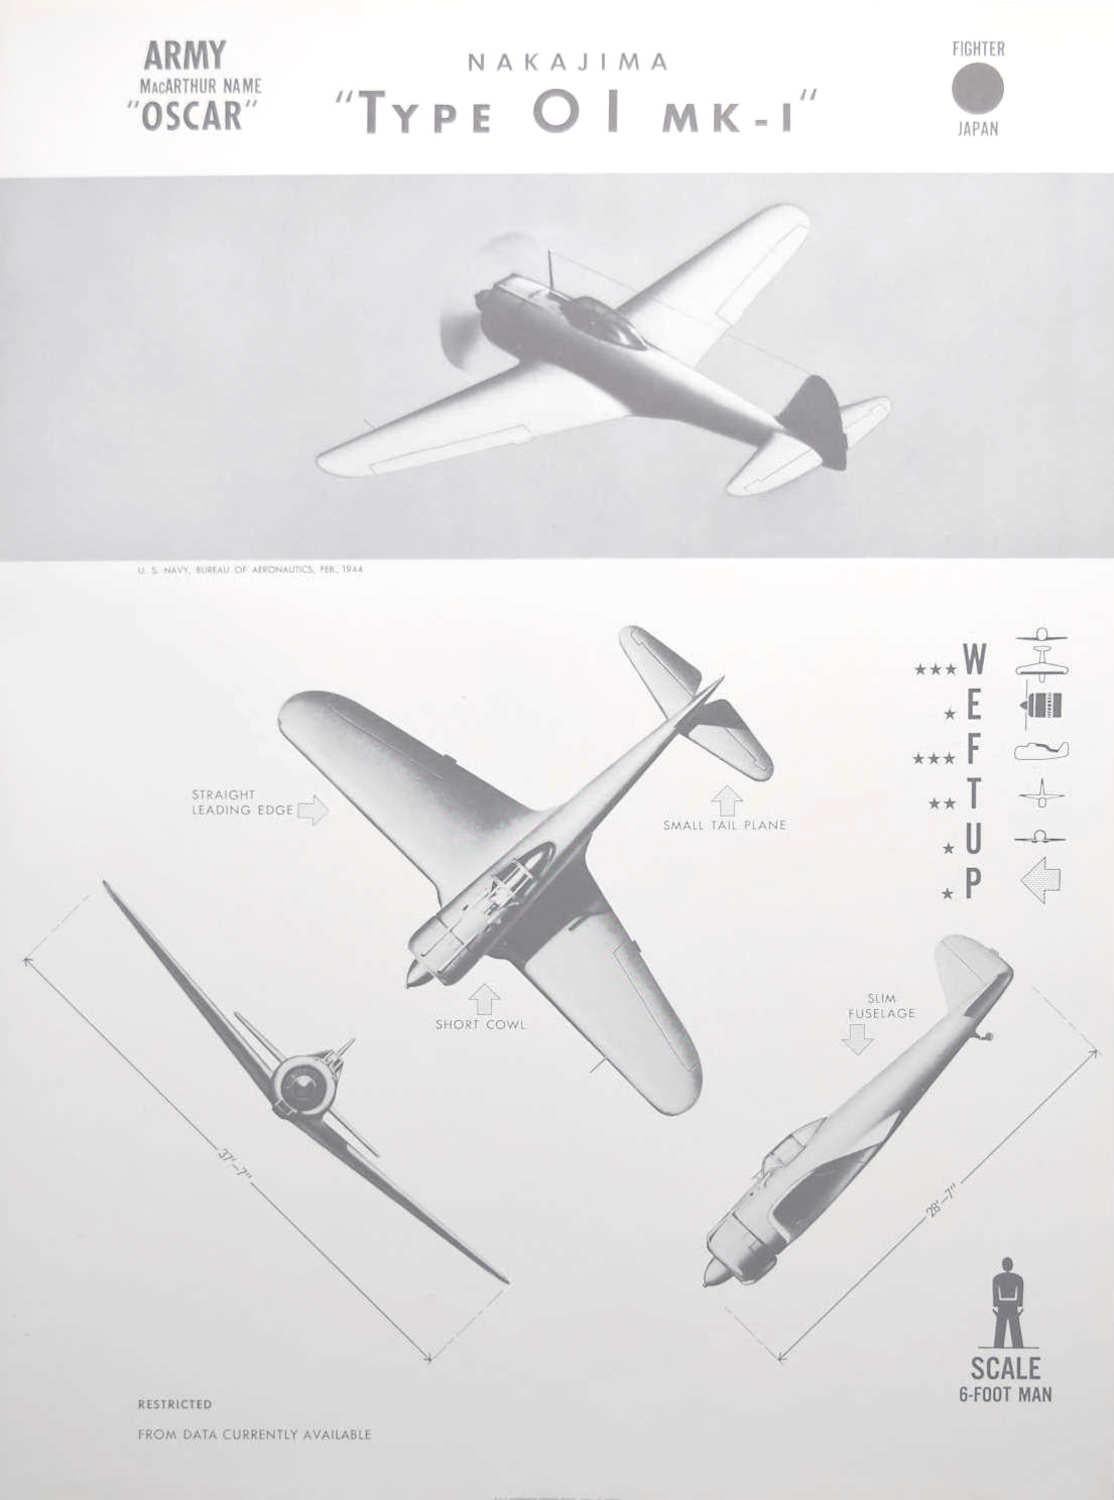 1942 Nakajima "Type OI MK-1" Japanese fighter plane identification poster WW2 - Print by Unknown